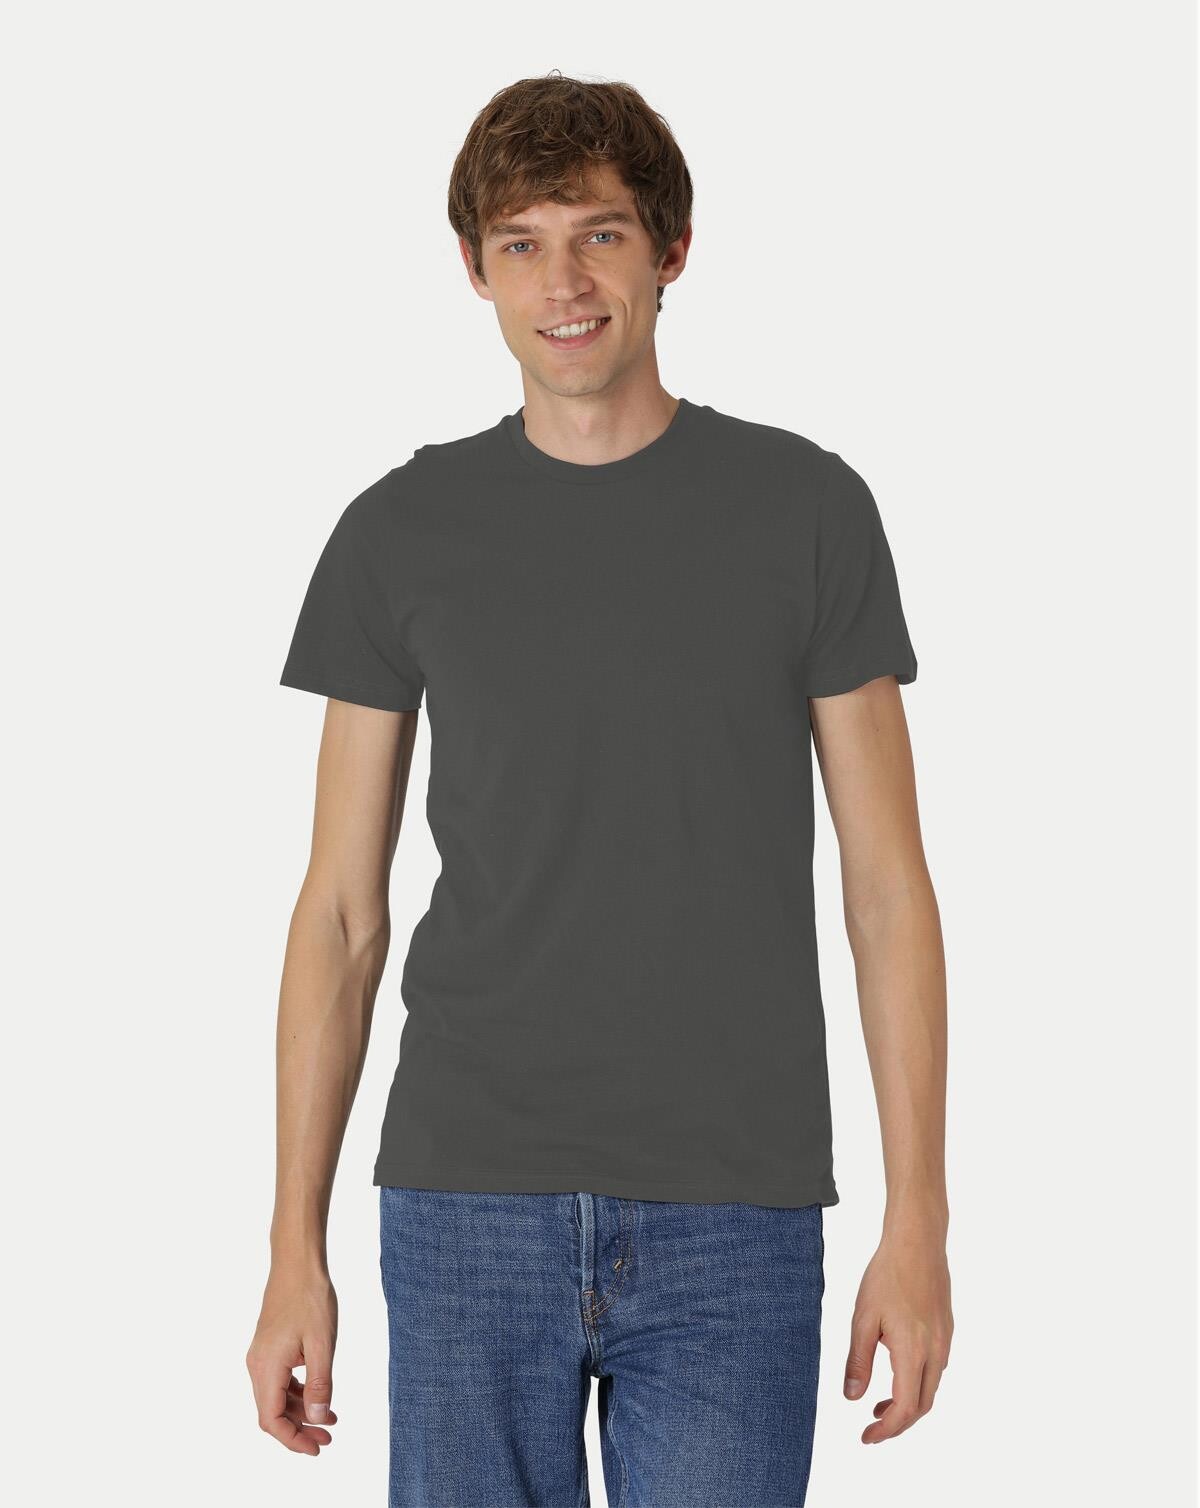 Billede af Neutral Organic - Mens Fitted T-shirt (Charcoal, 3XL)